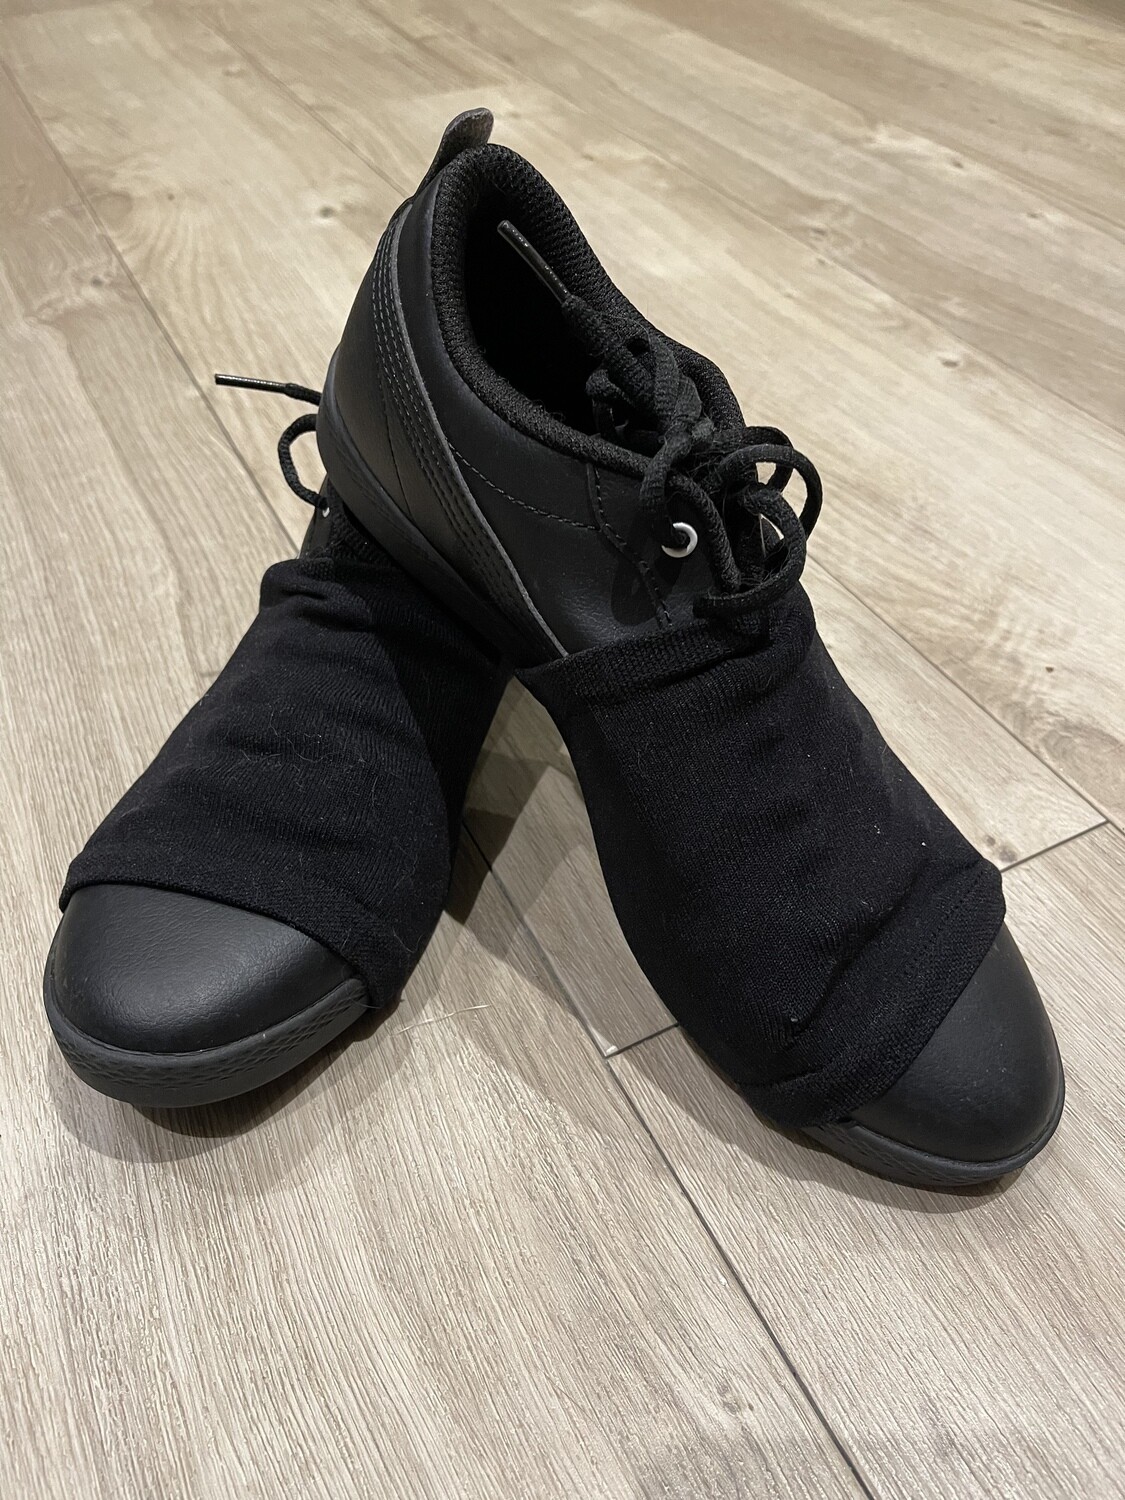 Over shoe dance socks - one pair